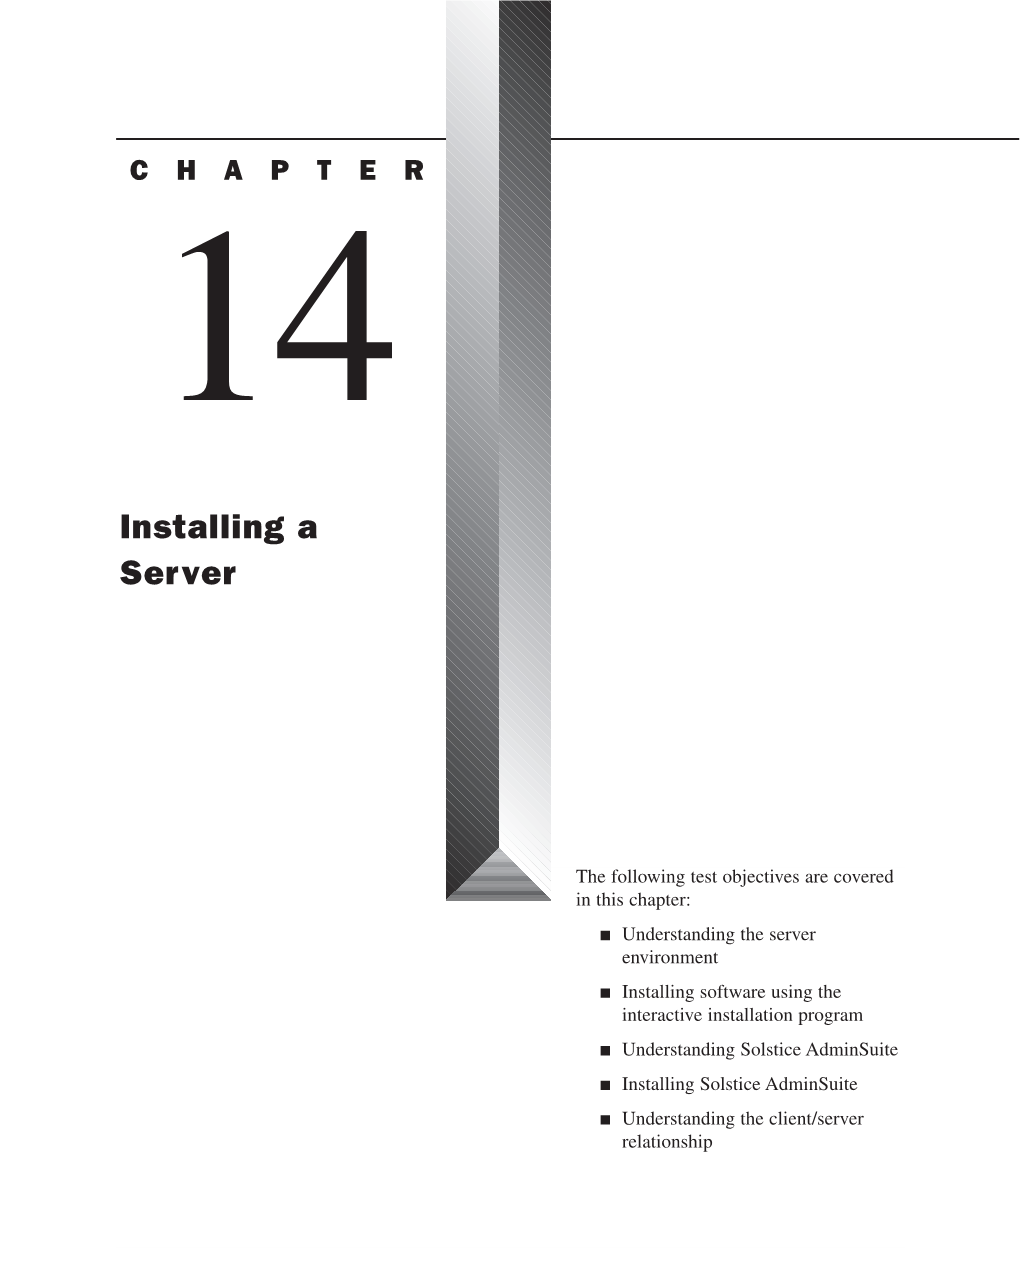 Installing a Server